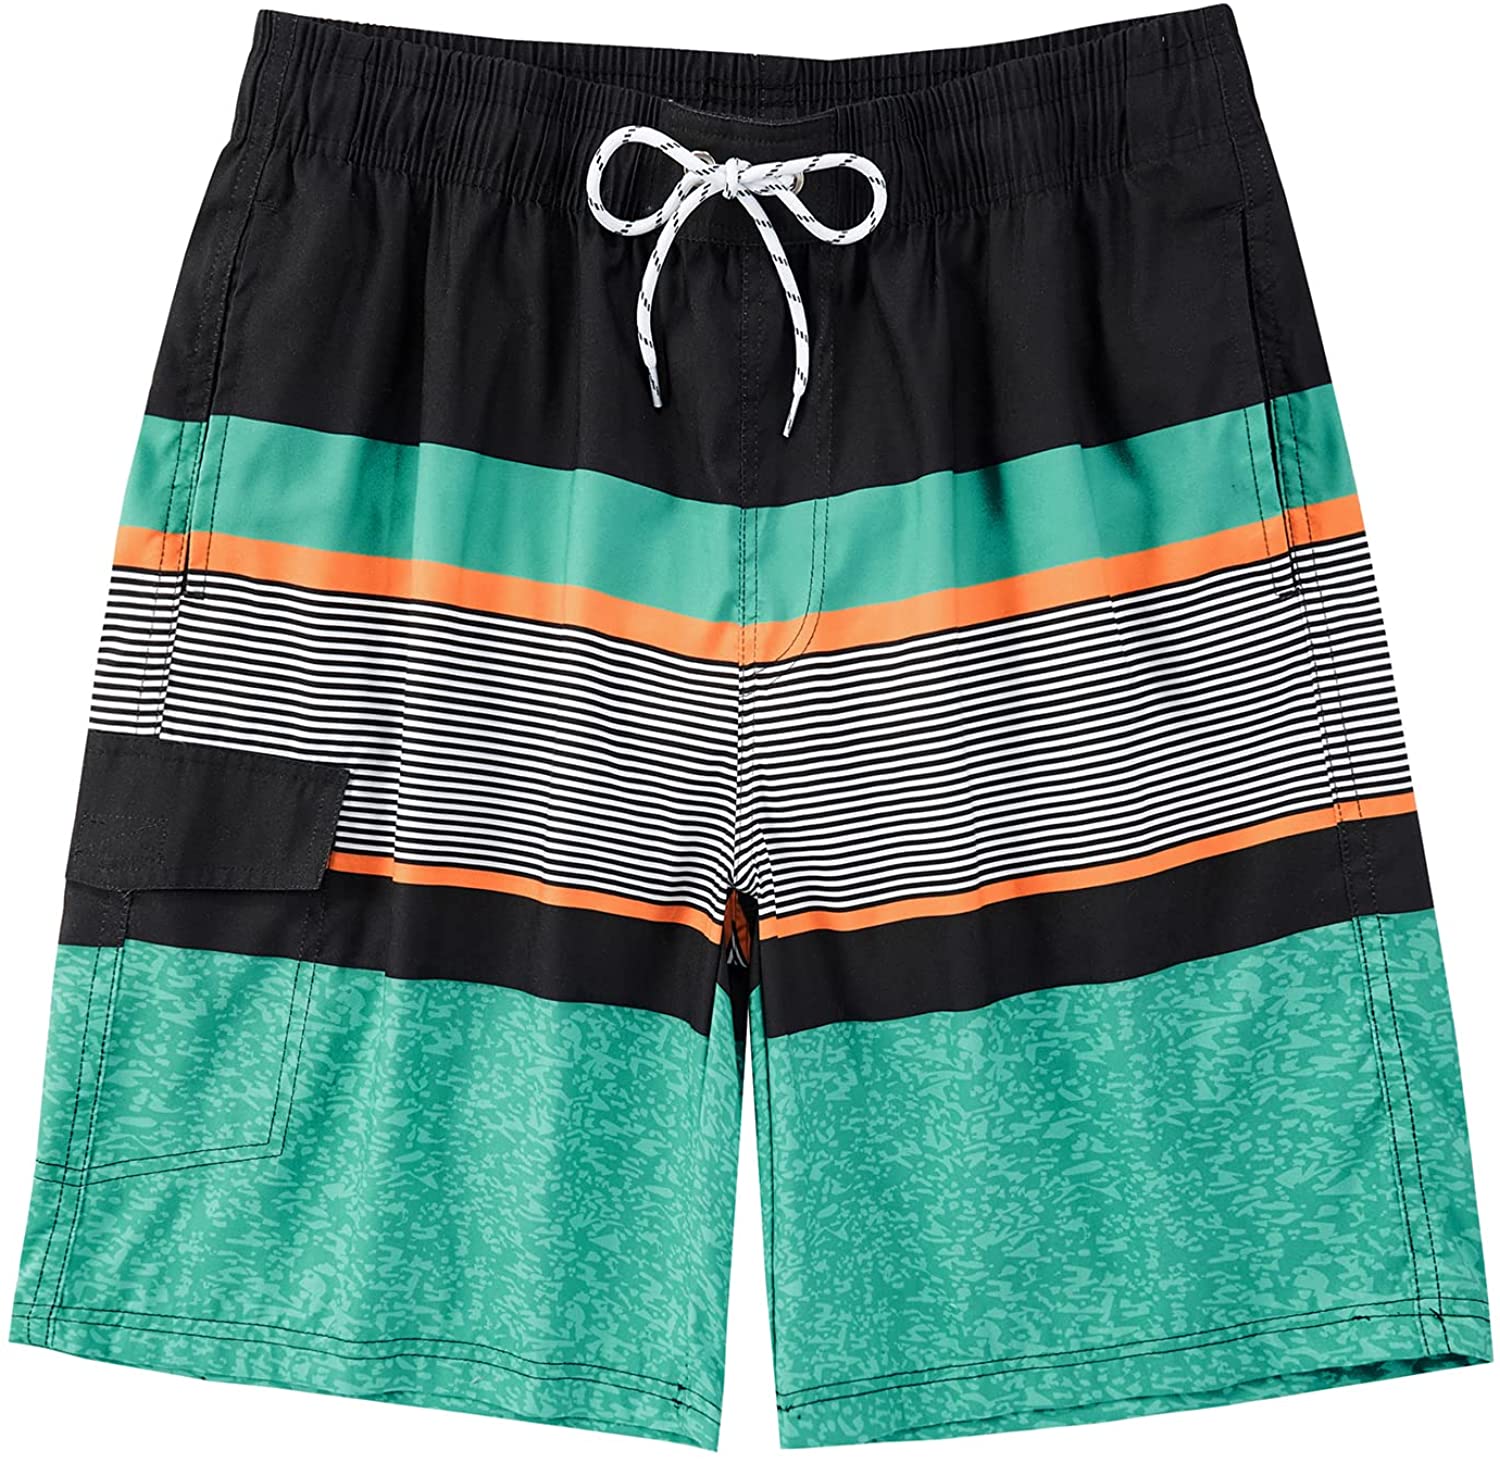 NEW BURNSIDE  Men's Swim Trunks Size XXL Quick Dry Orange/Navy  MSRP $42 